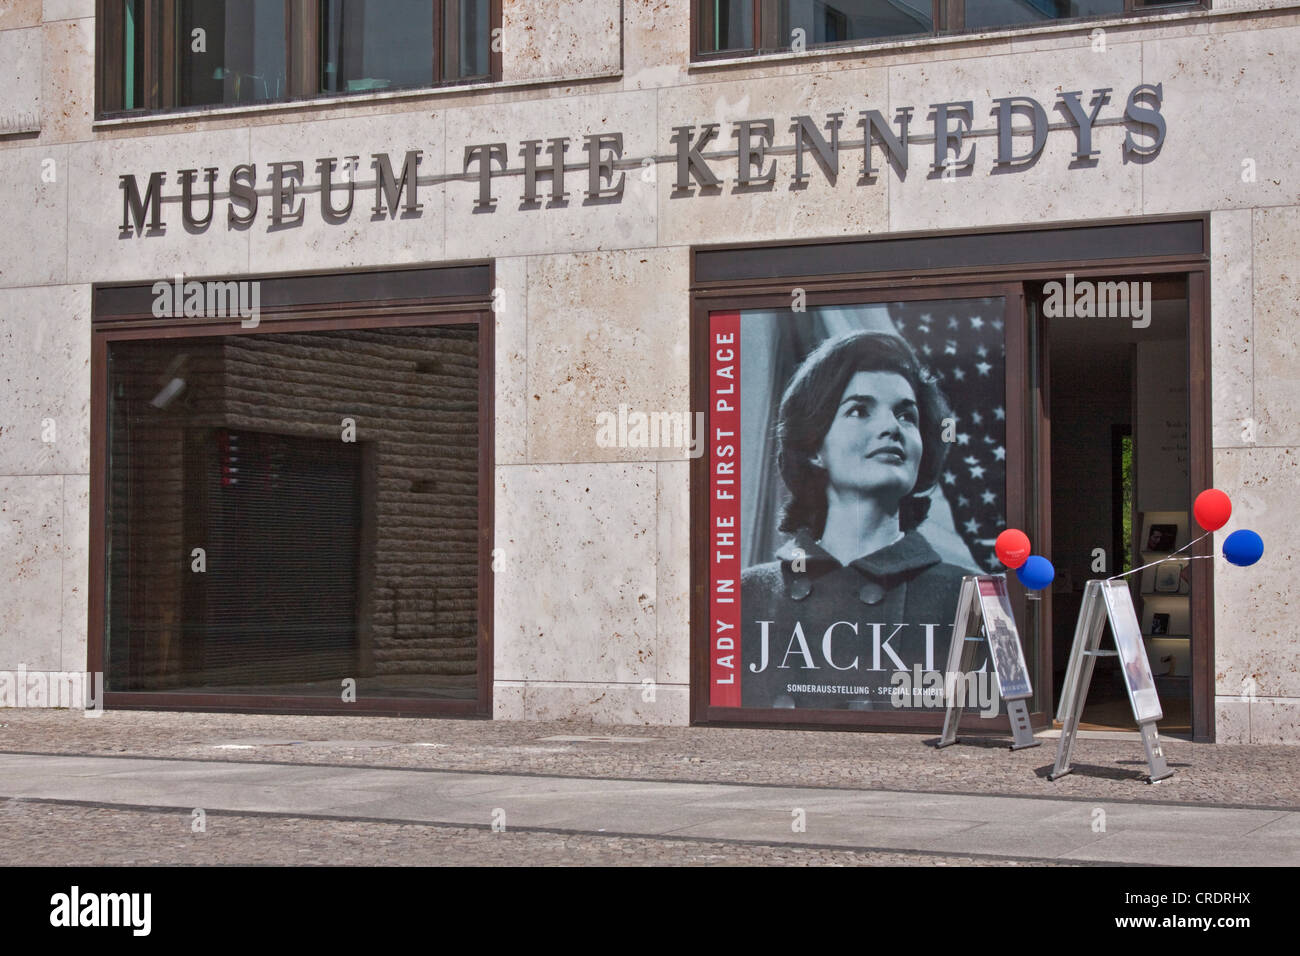 Il Museo Il Kennedys, Kennedy raccolta, Pariser Platz, Berlin, Germania, Europa Foto Stock